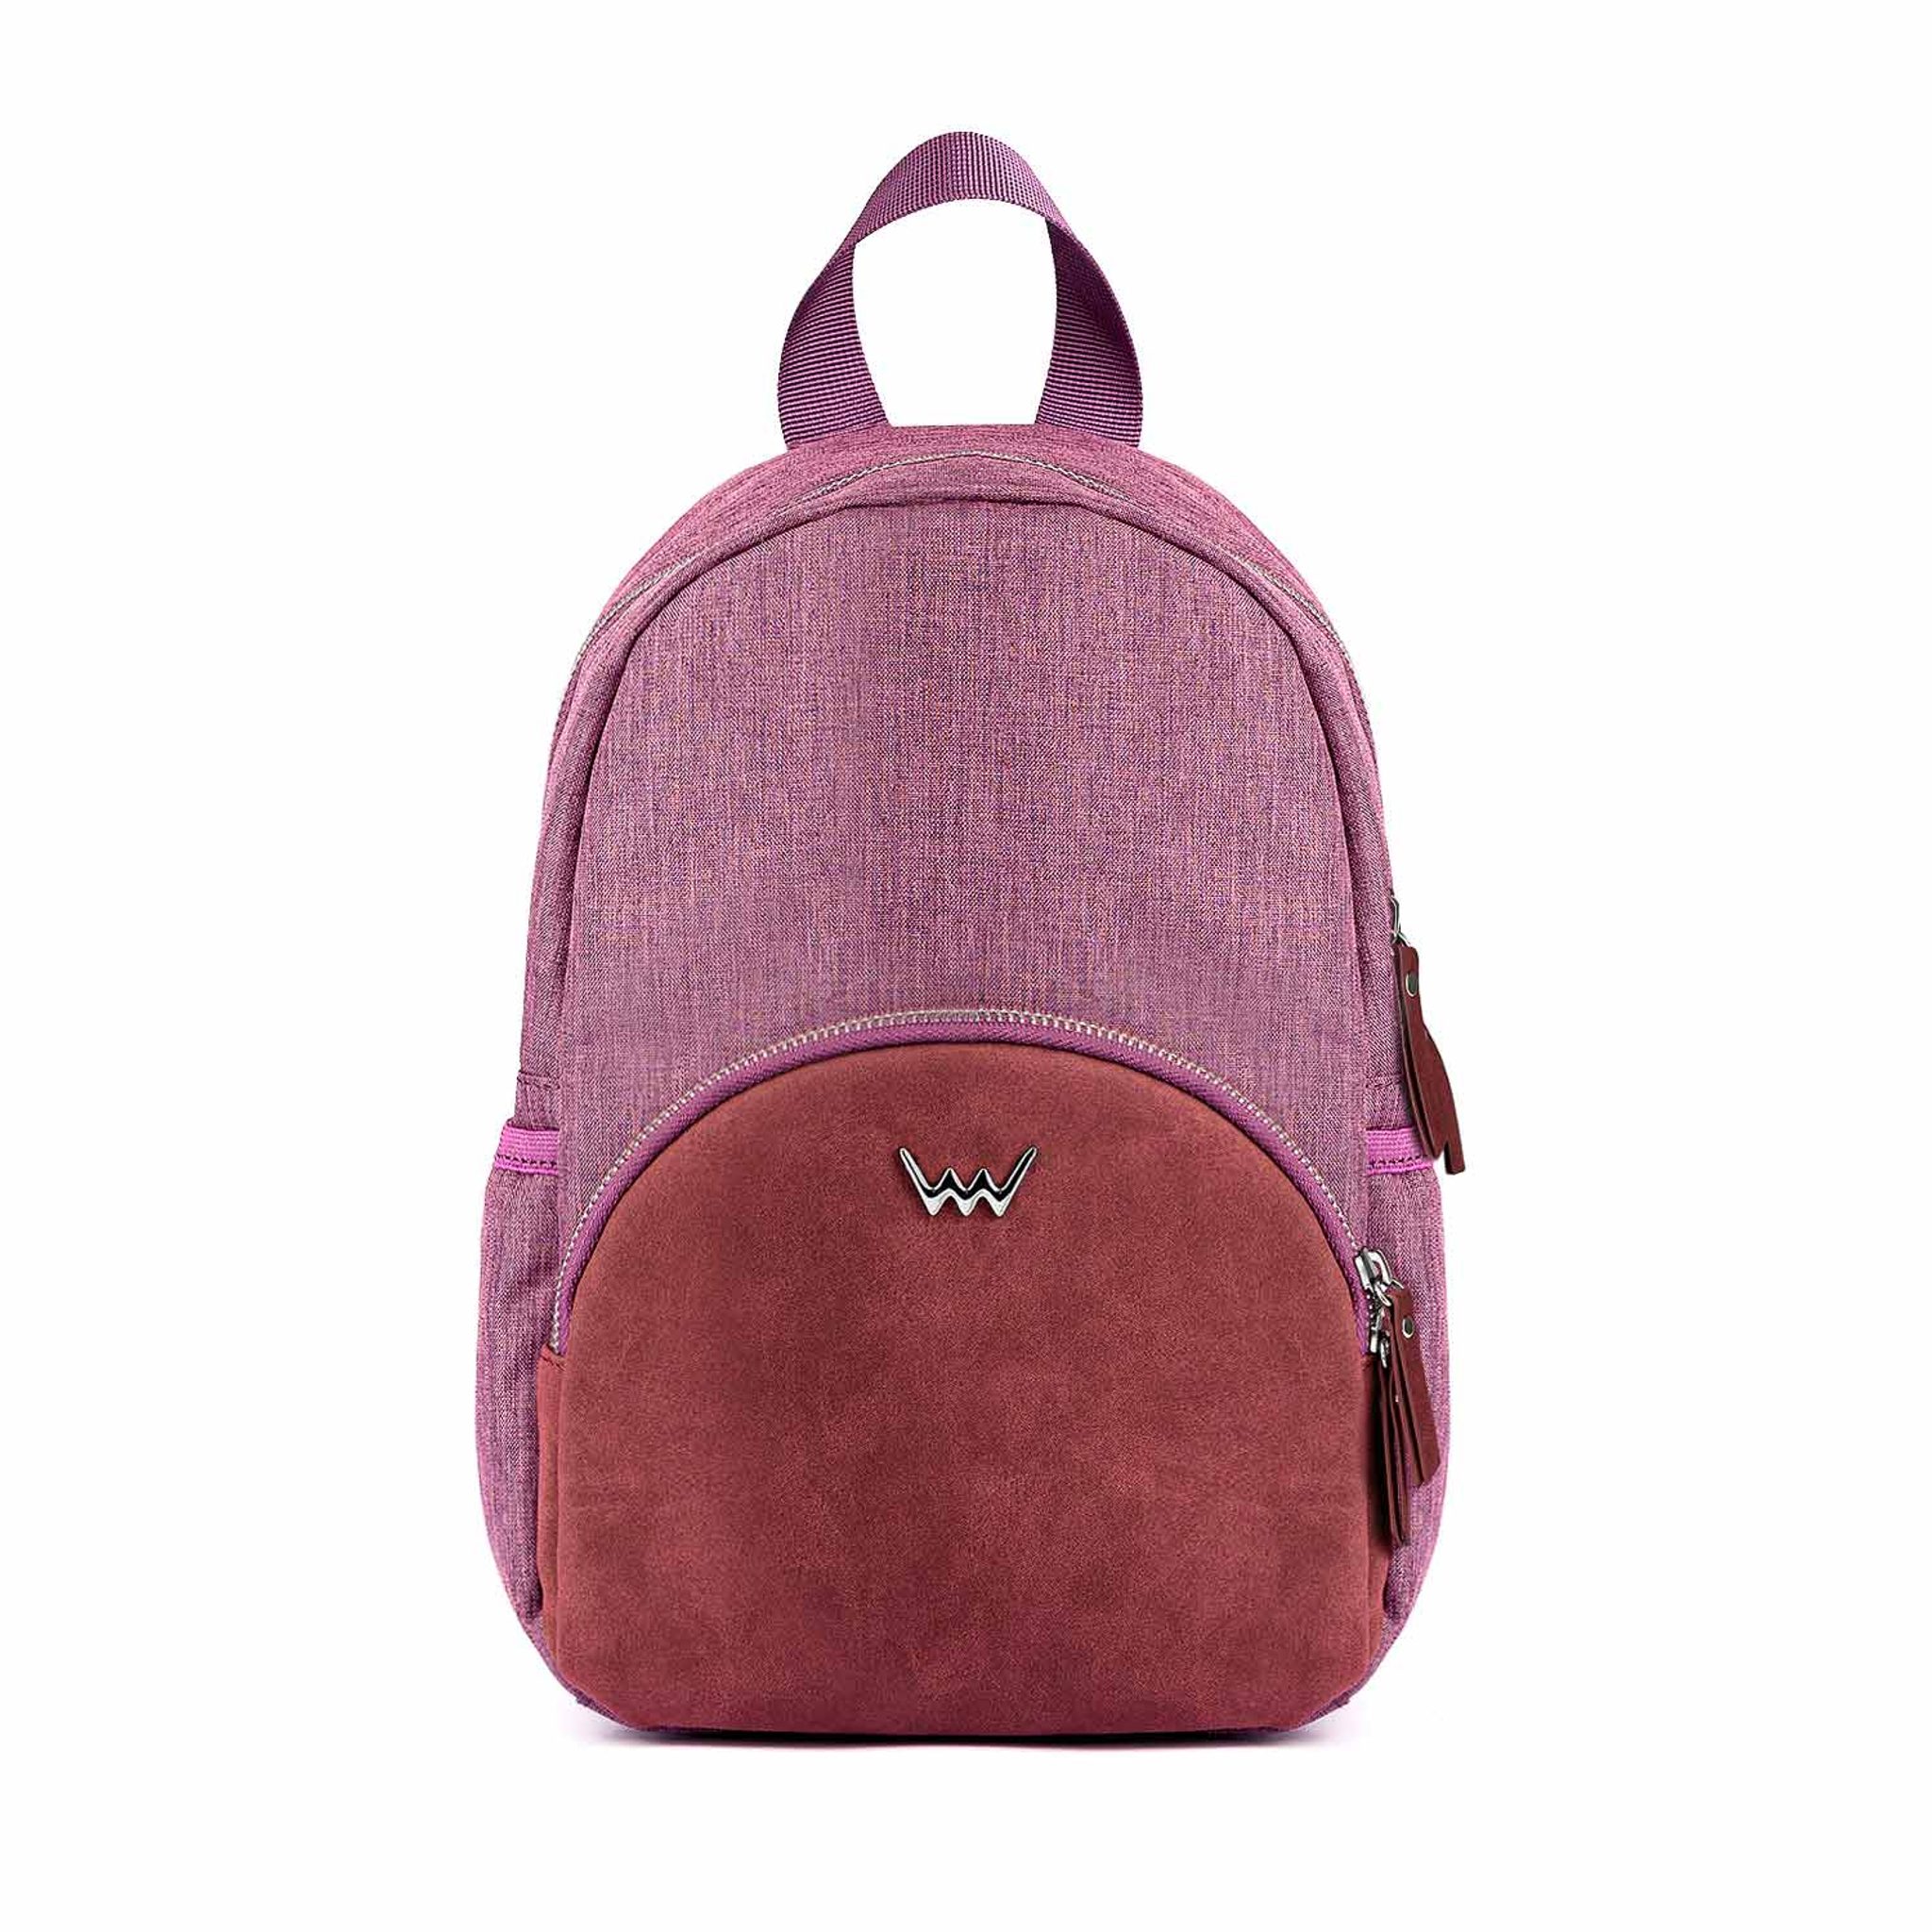 Fashion backpack VUCH Barney